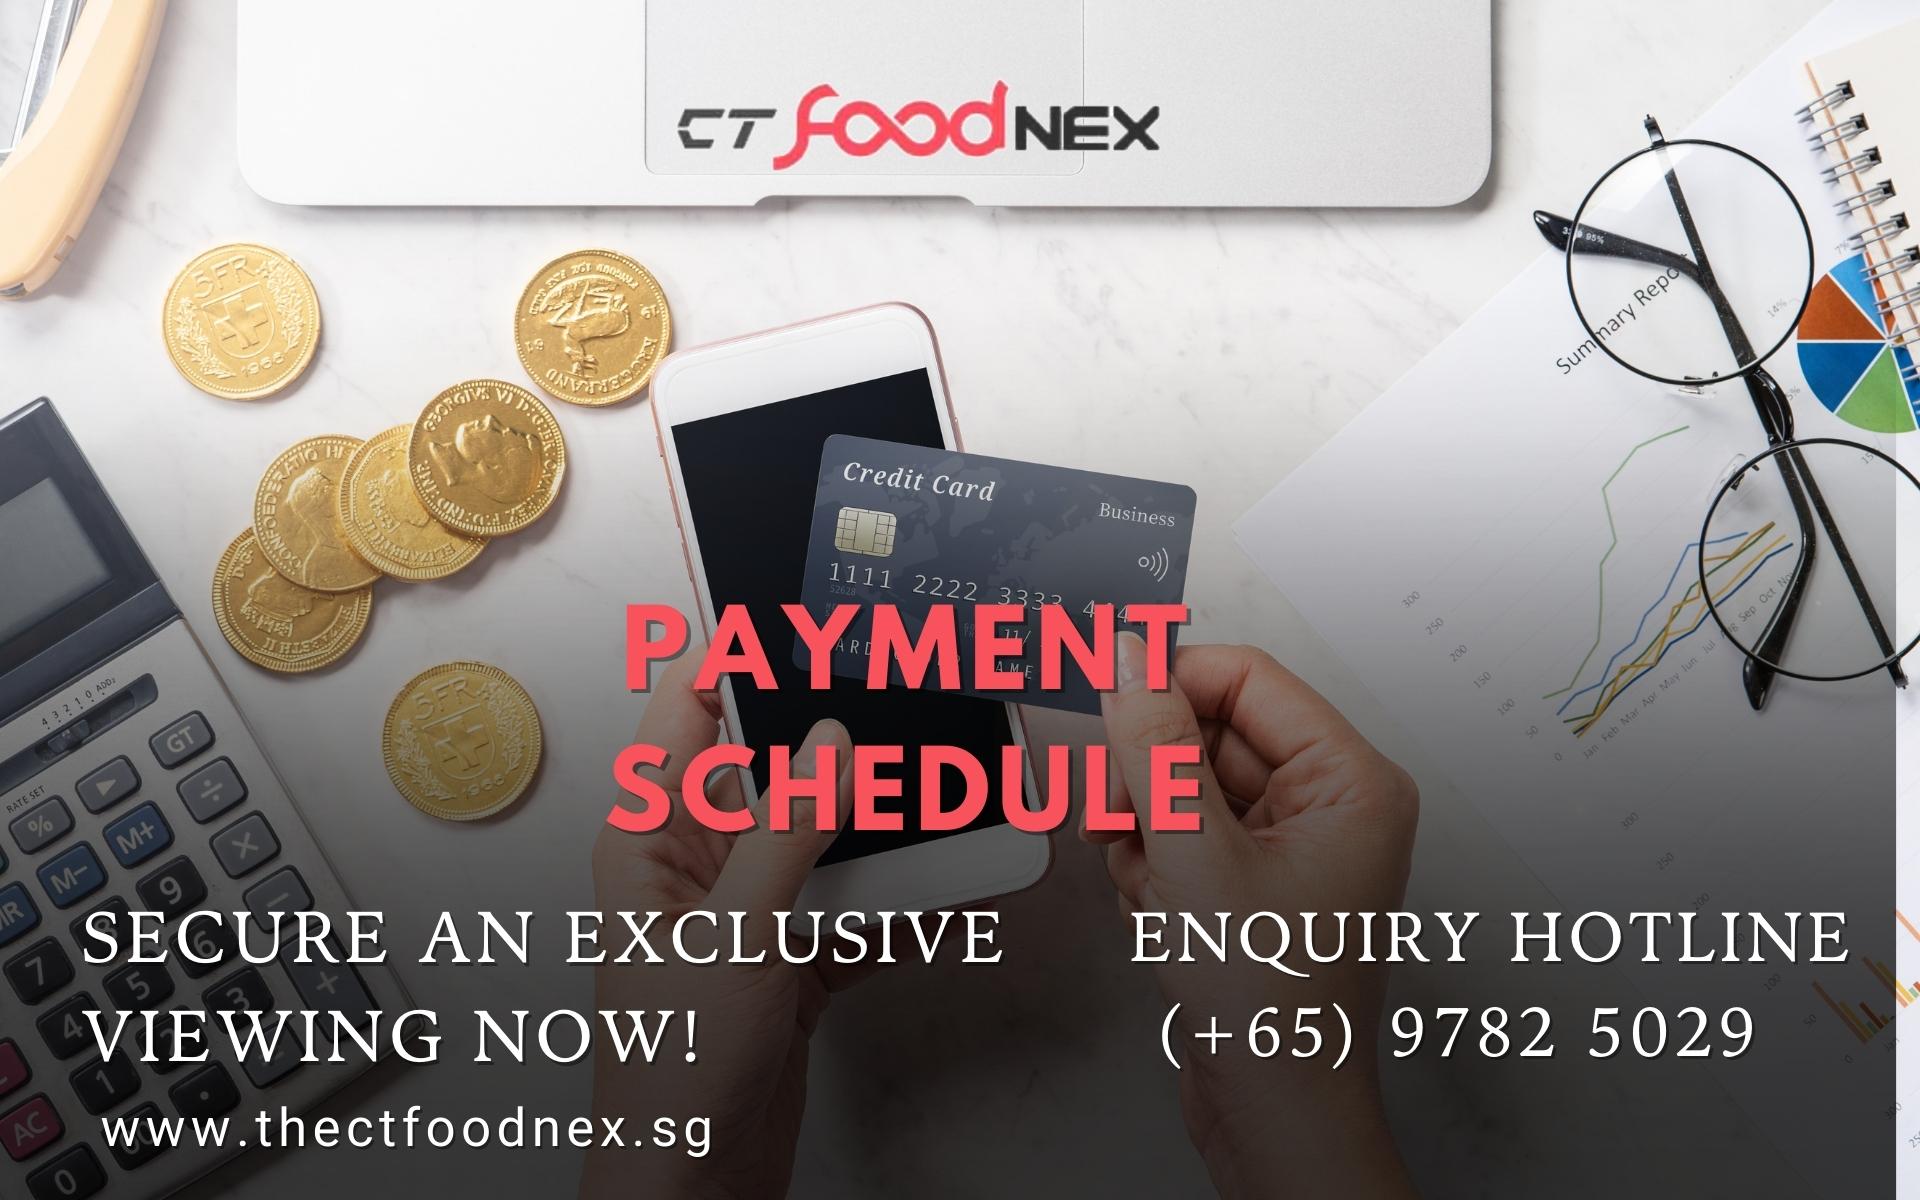 CT FoodNex Payment Schedule T9I100 